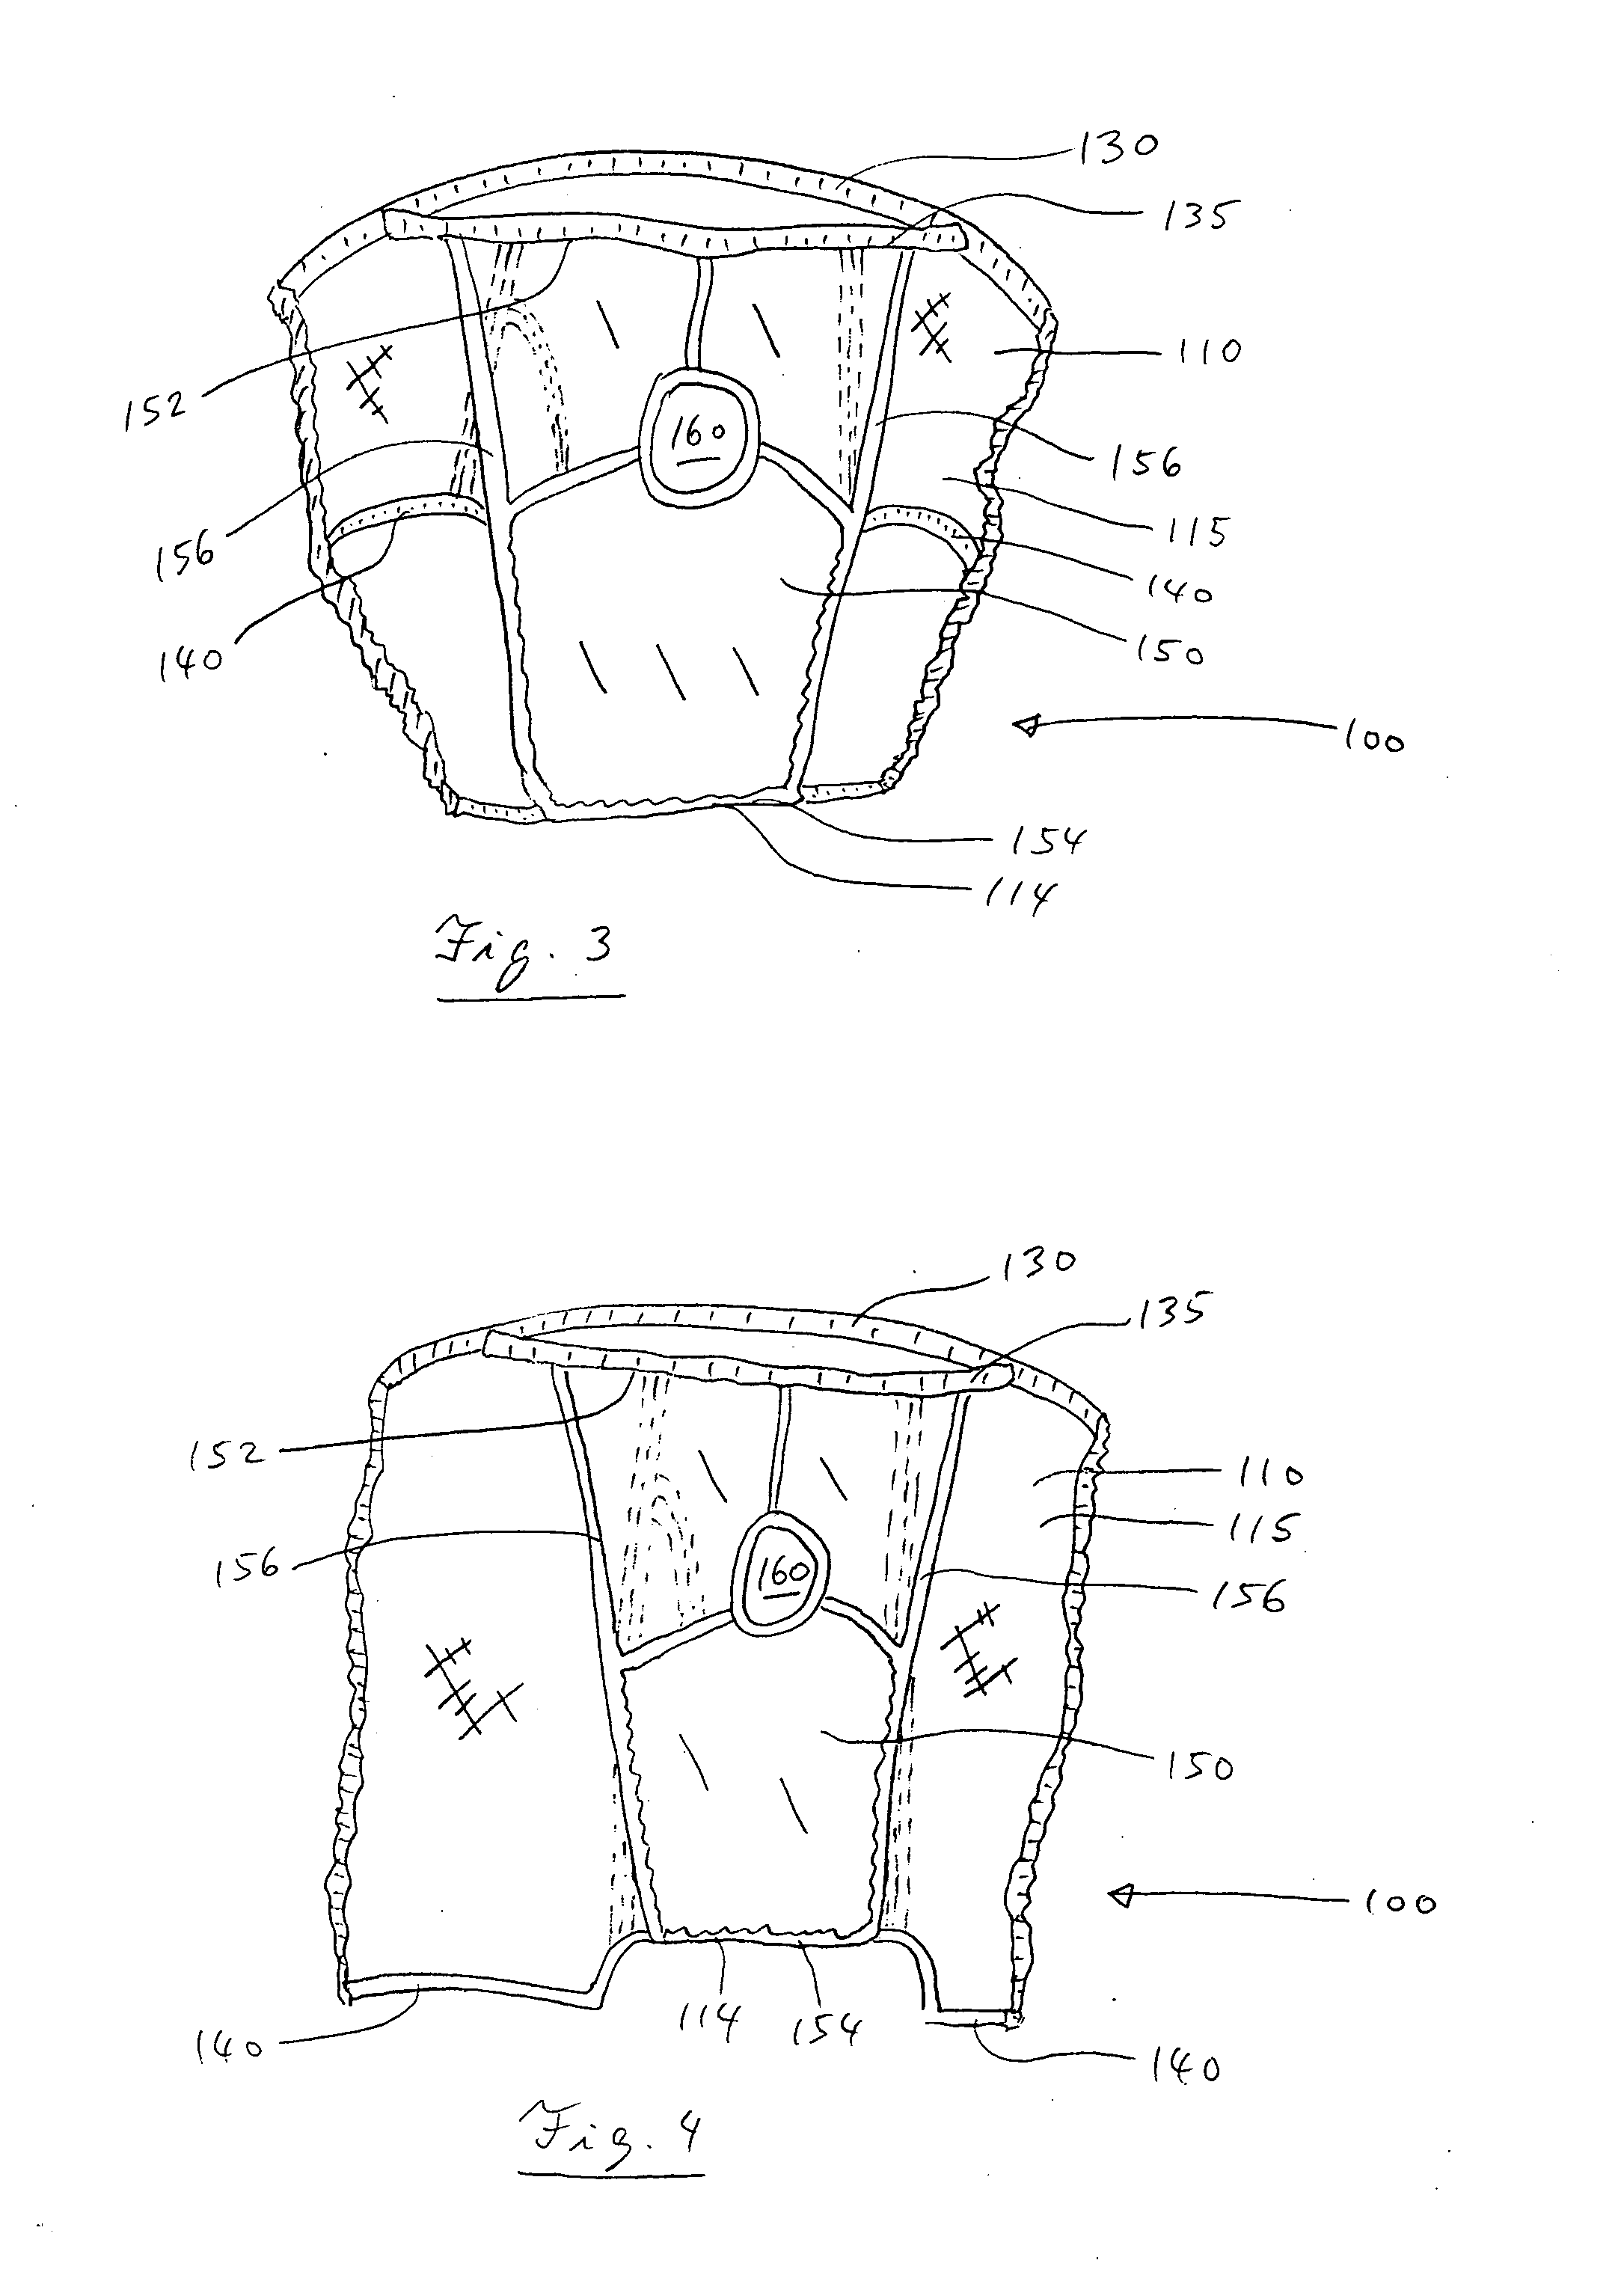 Comfort panel male underwear or shorts